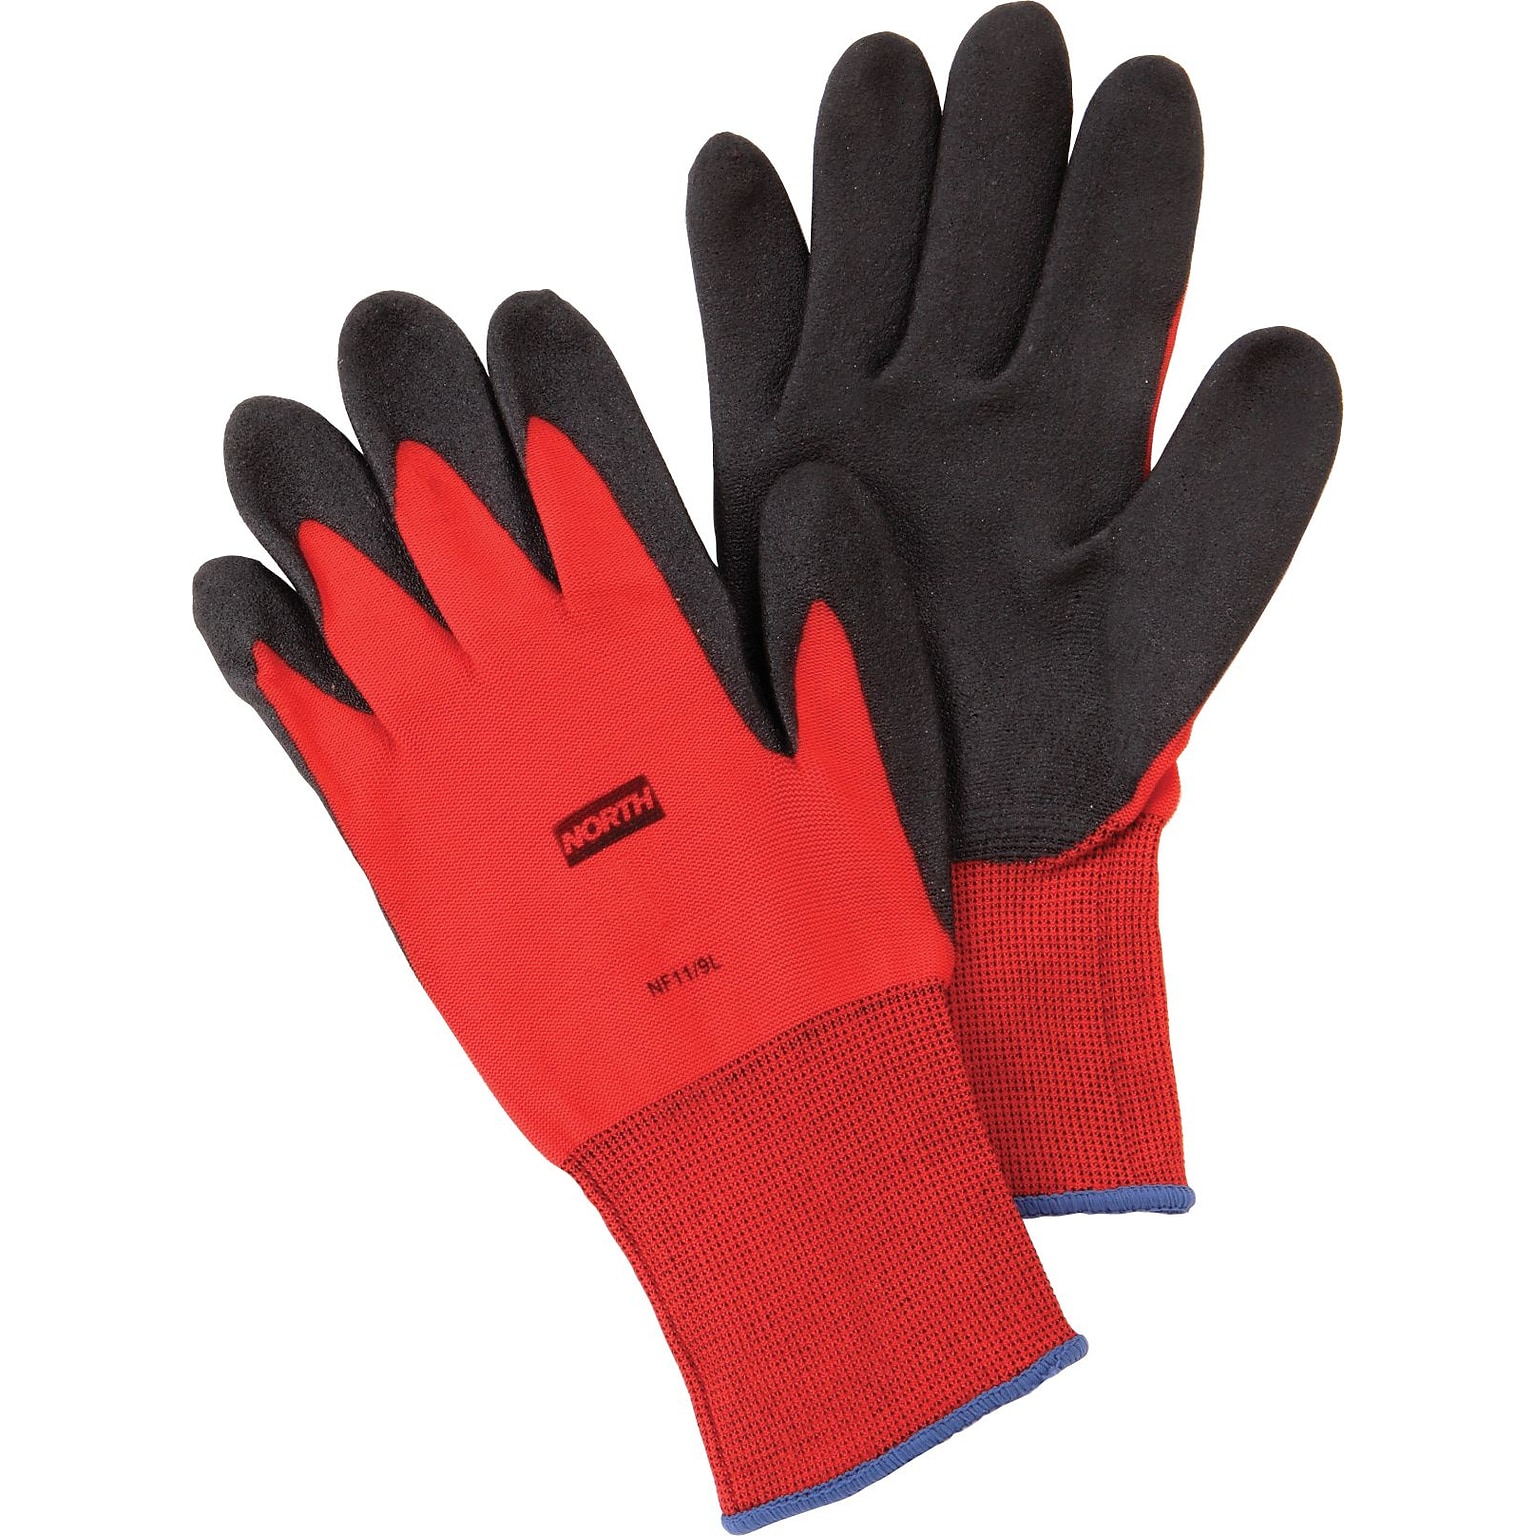 North Flex Red™ Coated Gloves, PVC, Knit-Wrist Cuff, Red/Black, Medium, 12 Pairs (NF11/8M)